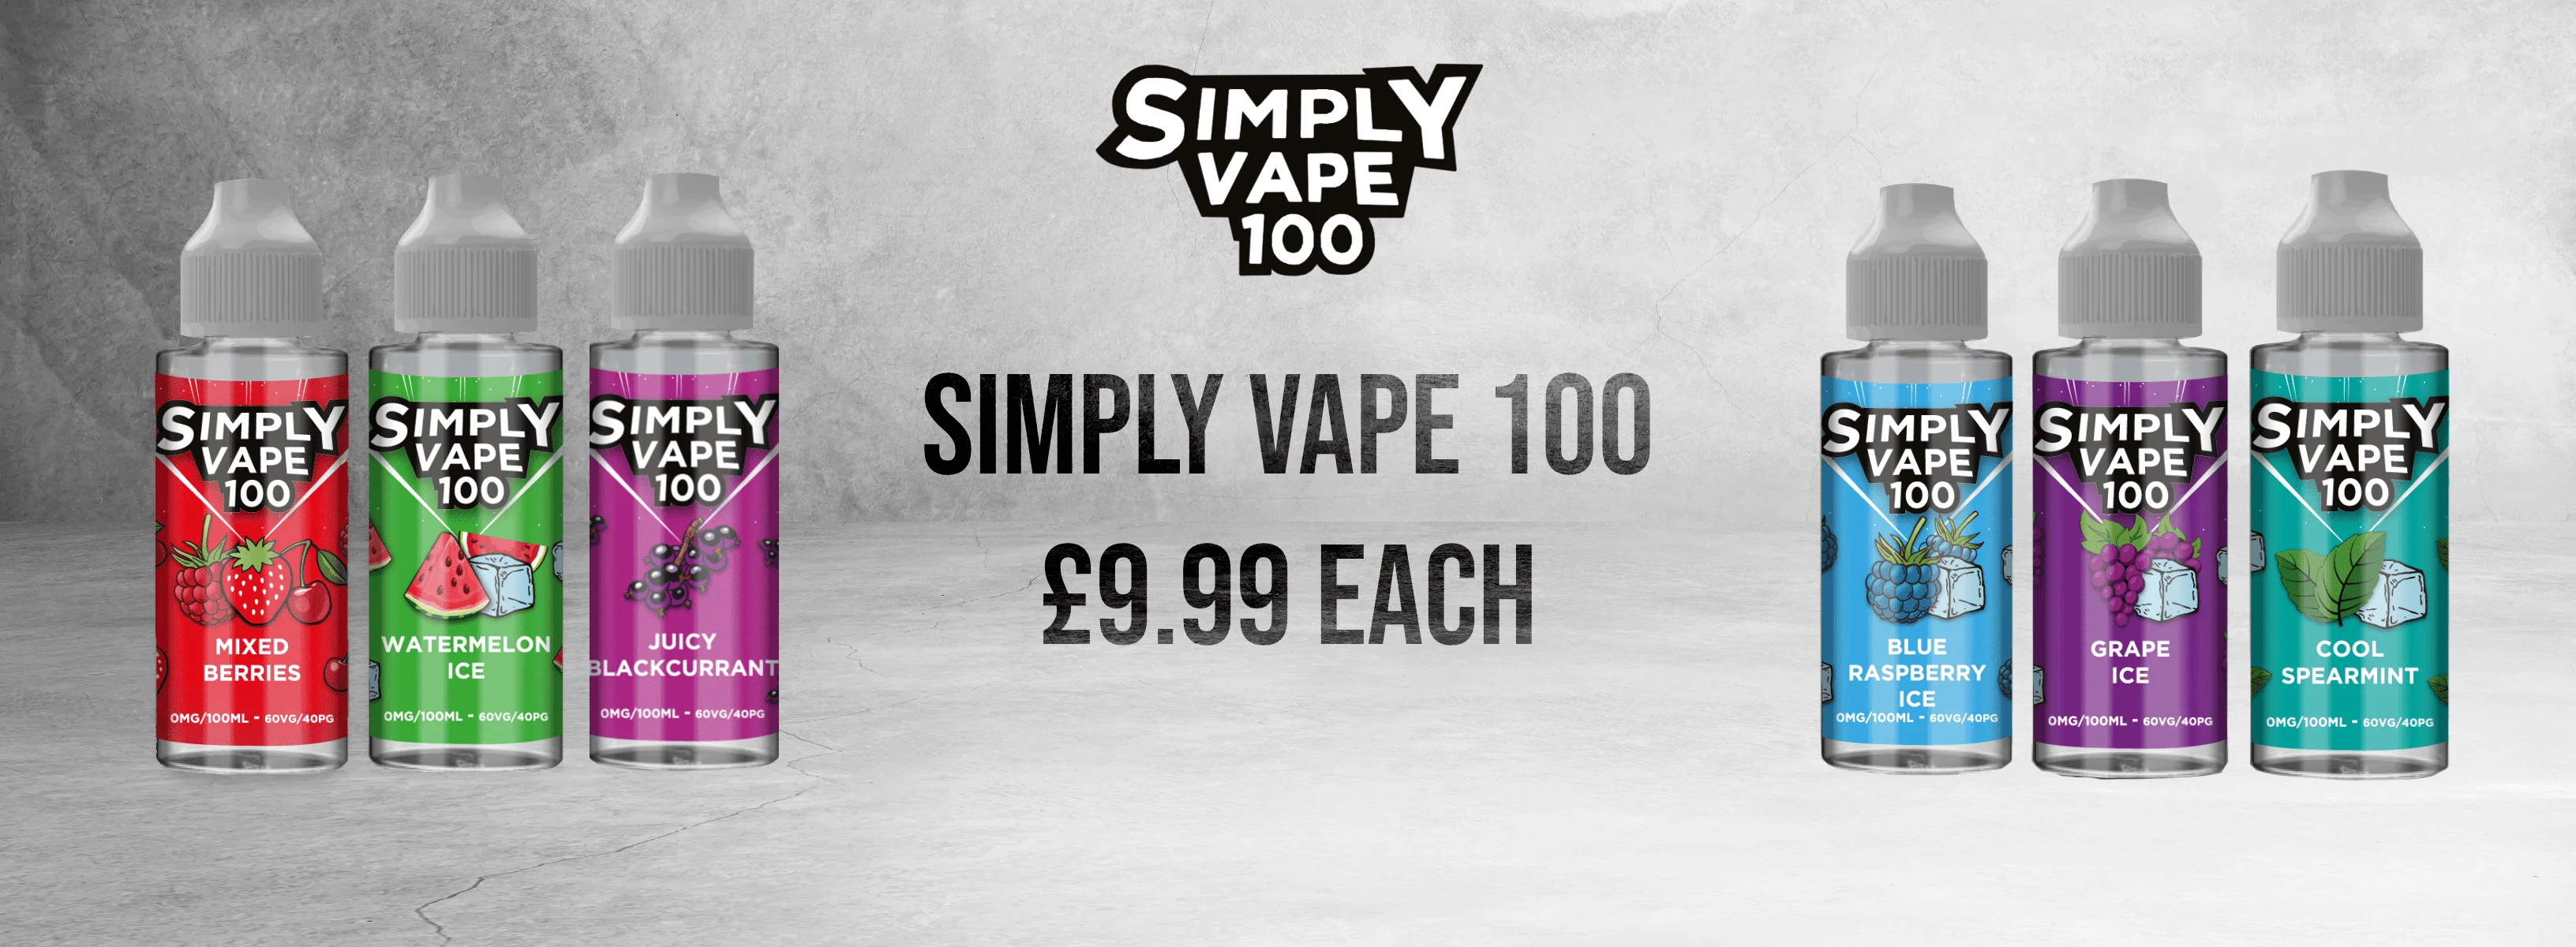 Advert for Simply Vape 100